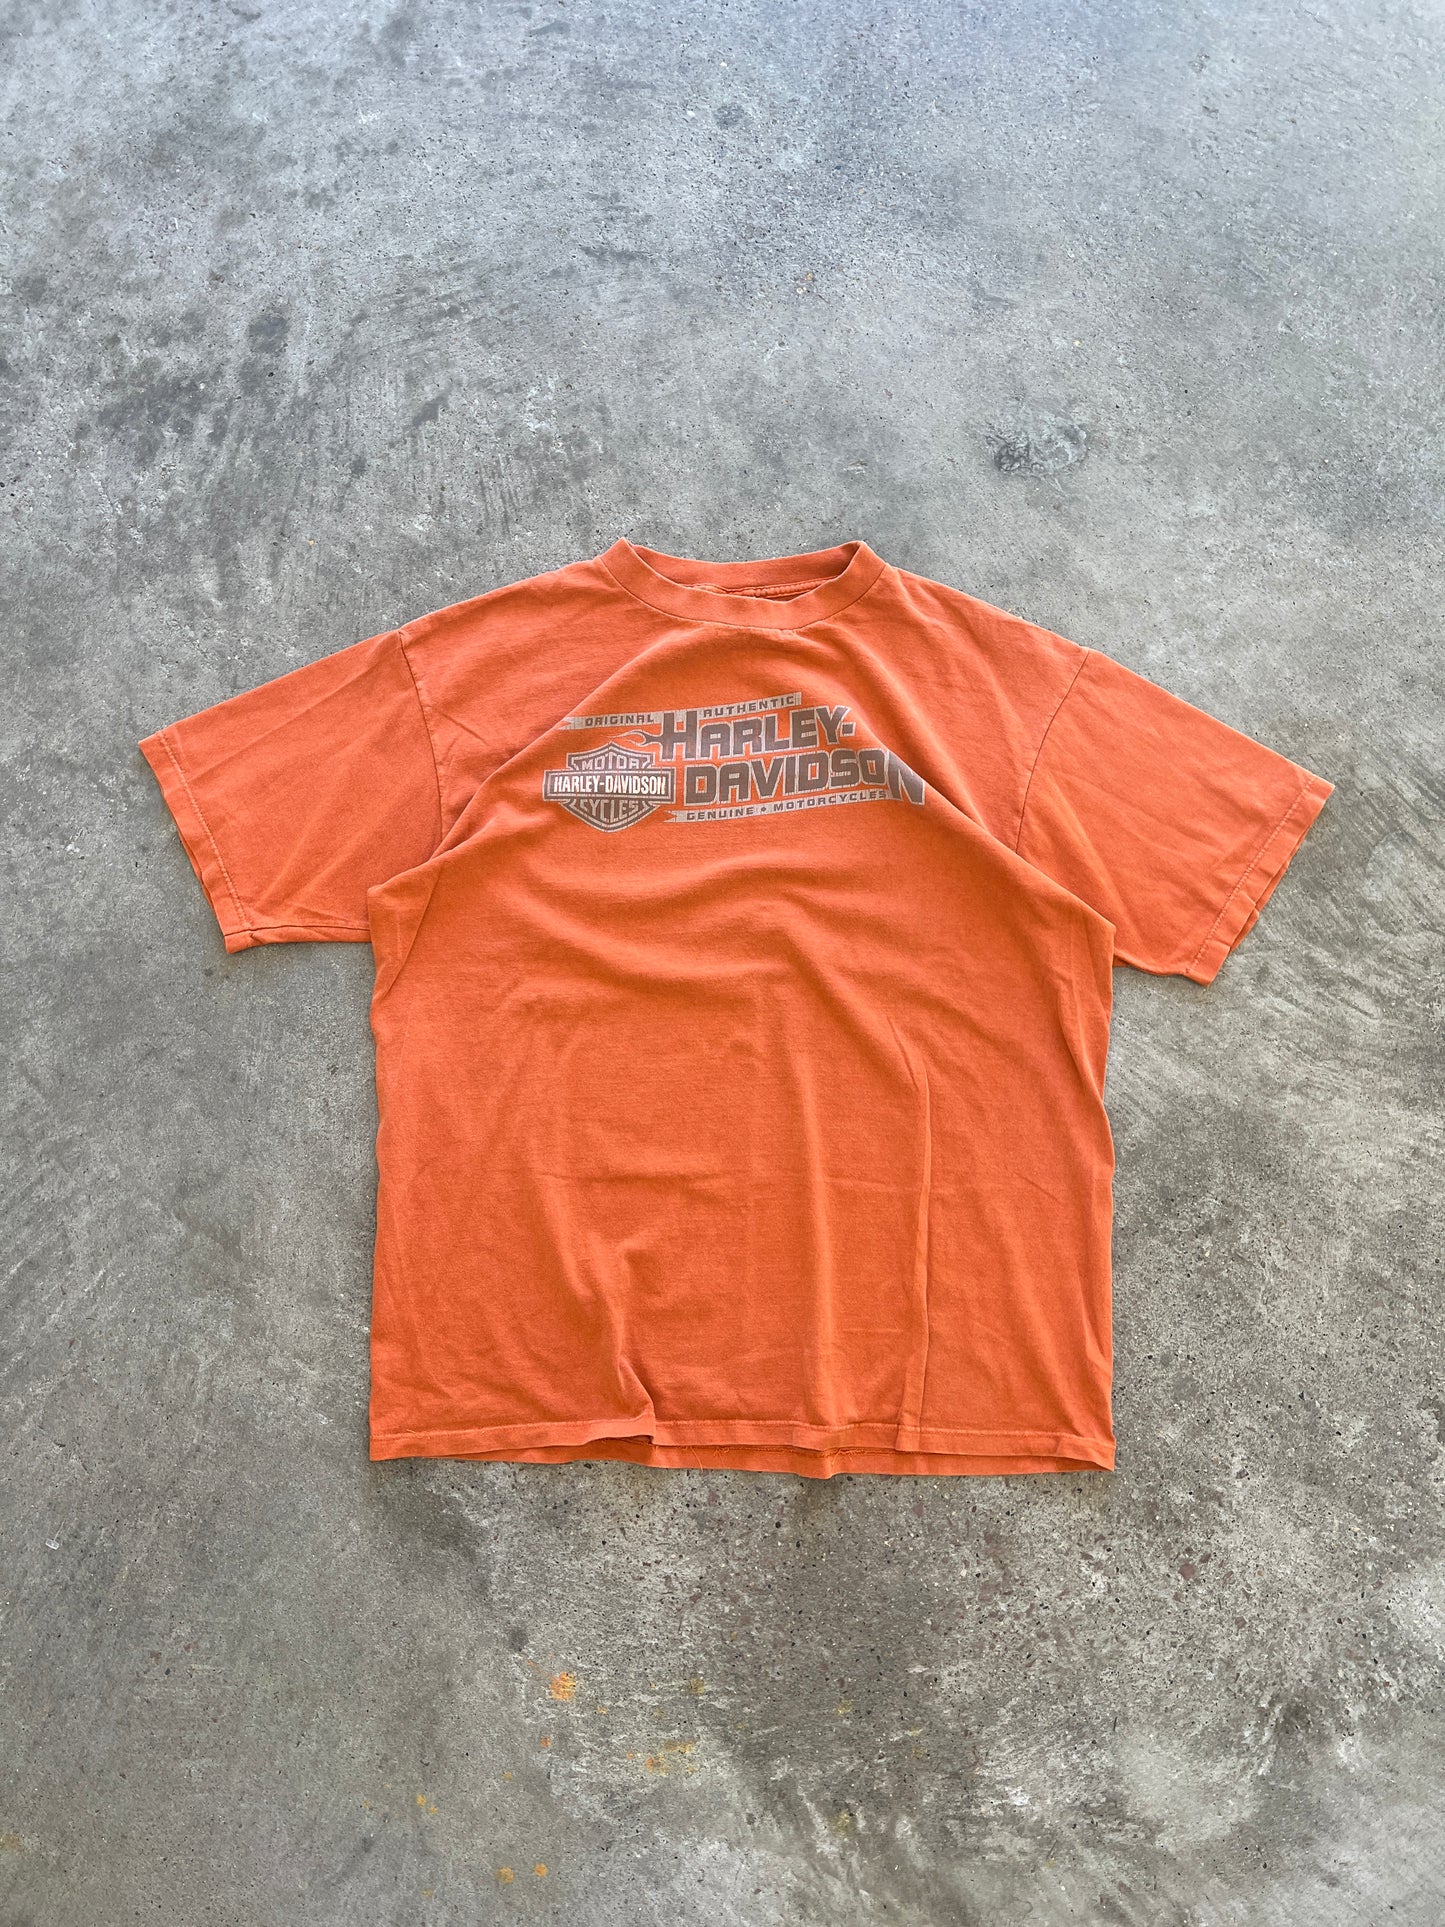 Vintage Orange Harley Davidson Shirt - XL